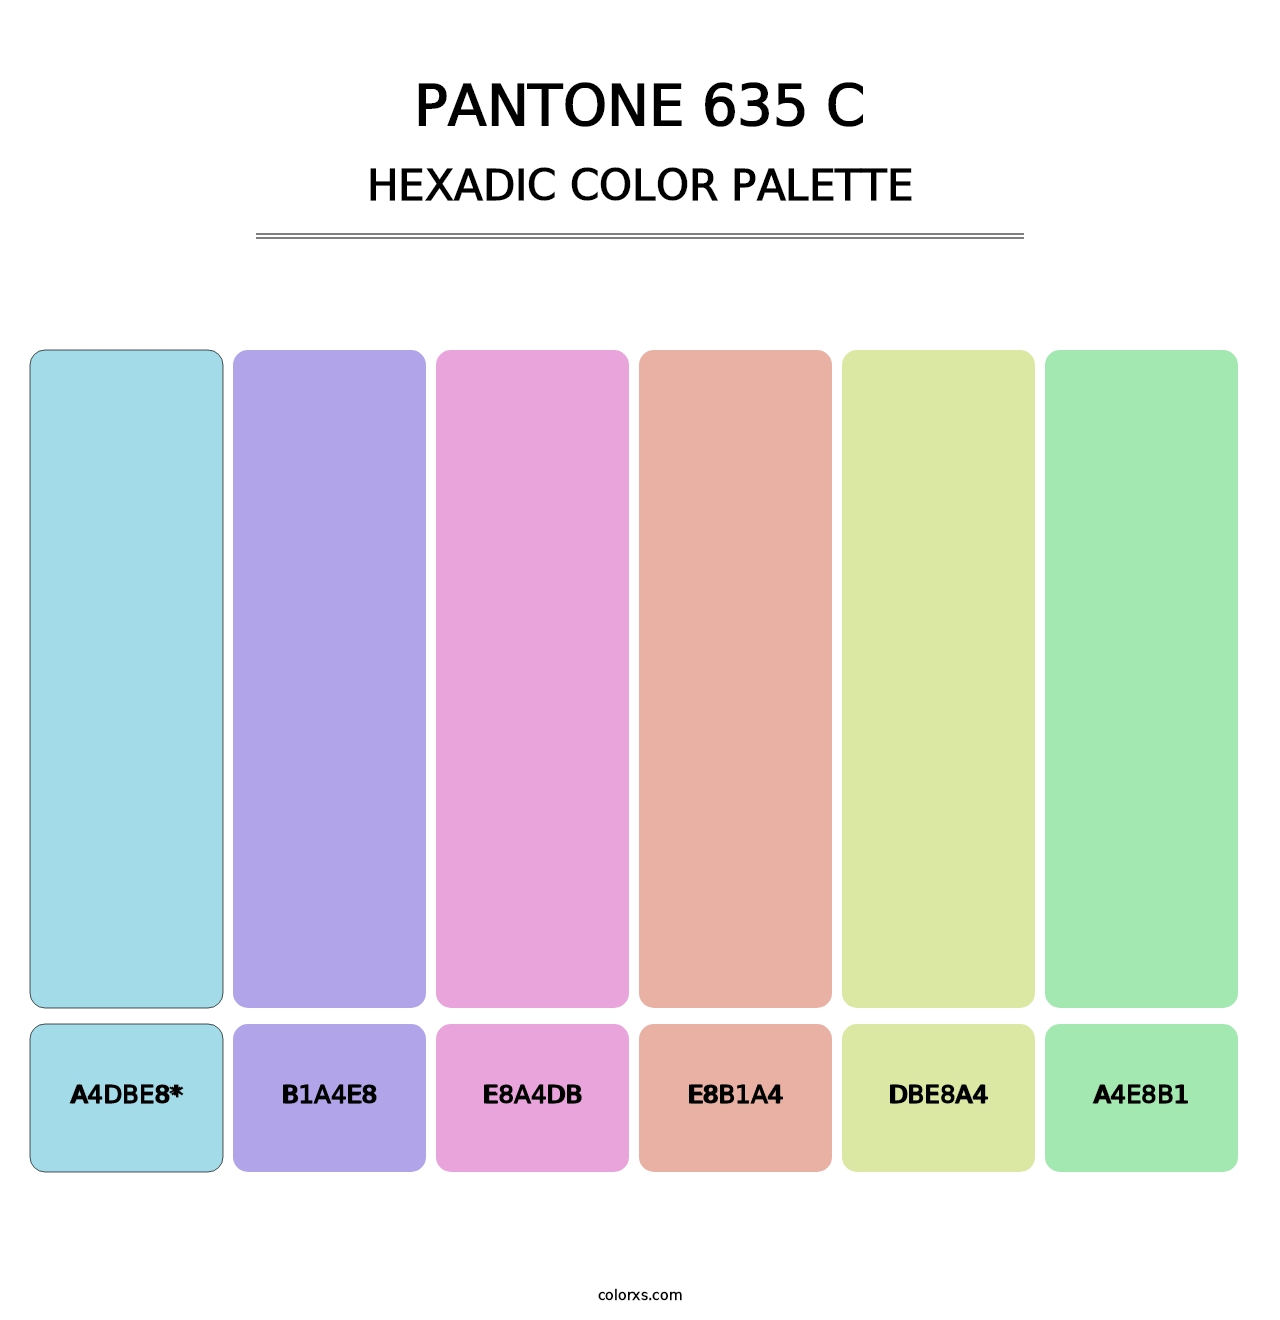 PANTONE 635 C - Hexadic Color Palette